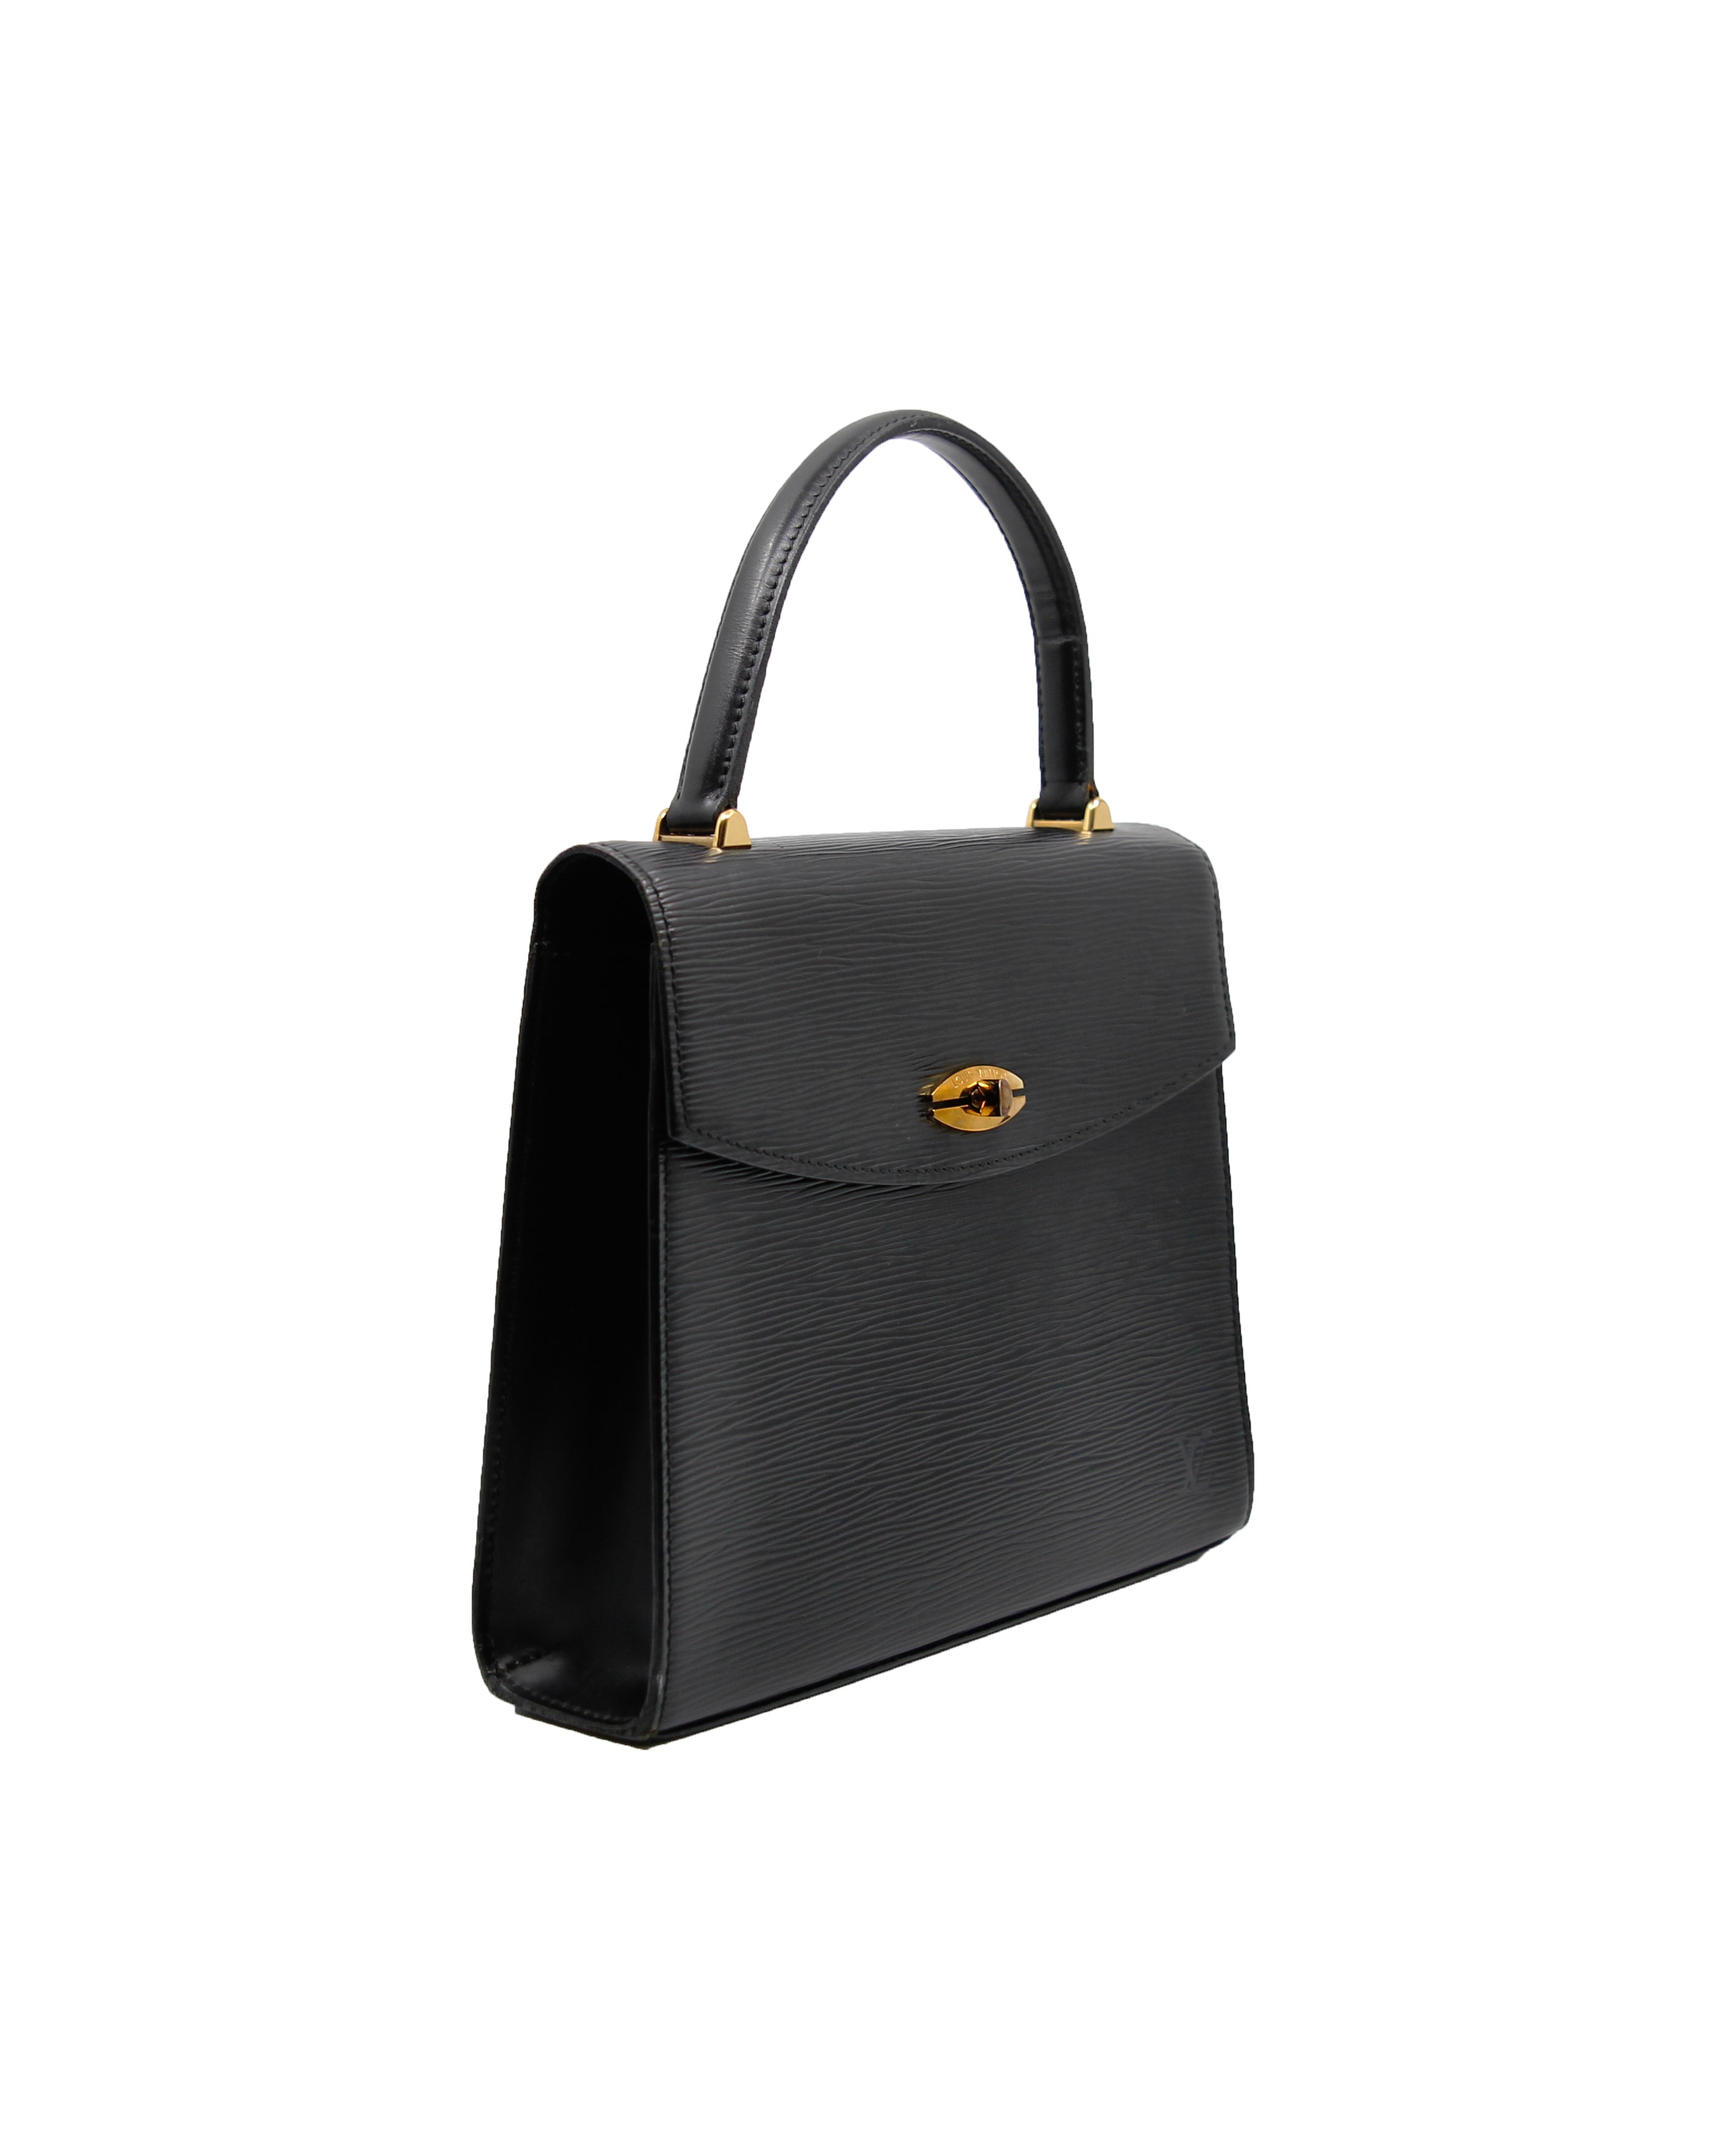 Authentic Louis Vuitton Epi Malesherbes Black Leather Handbag